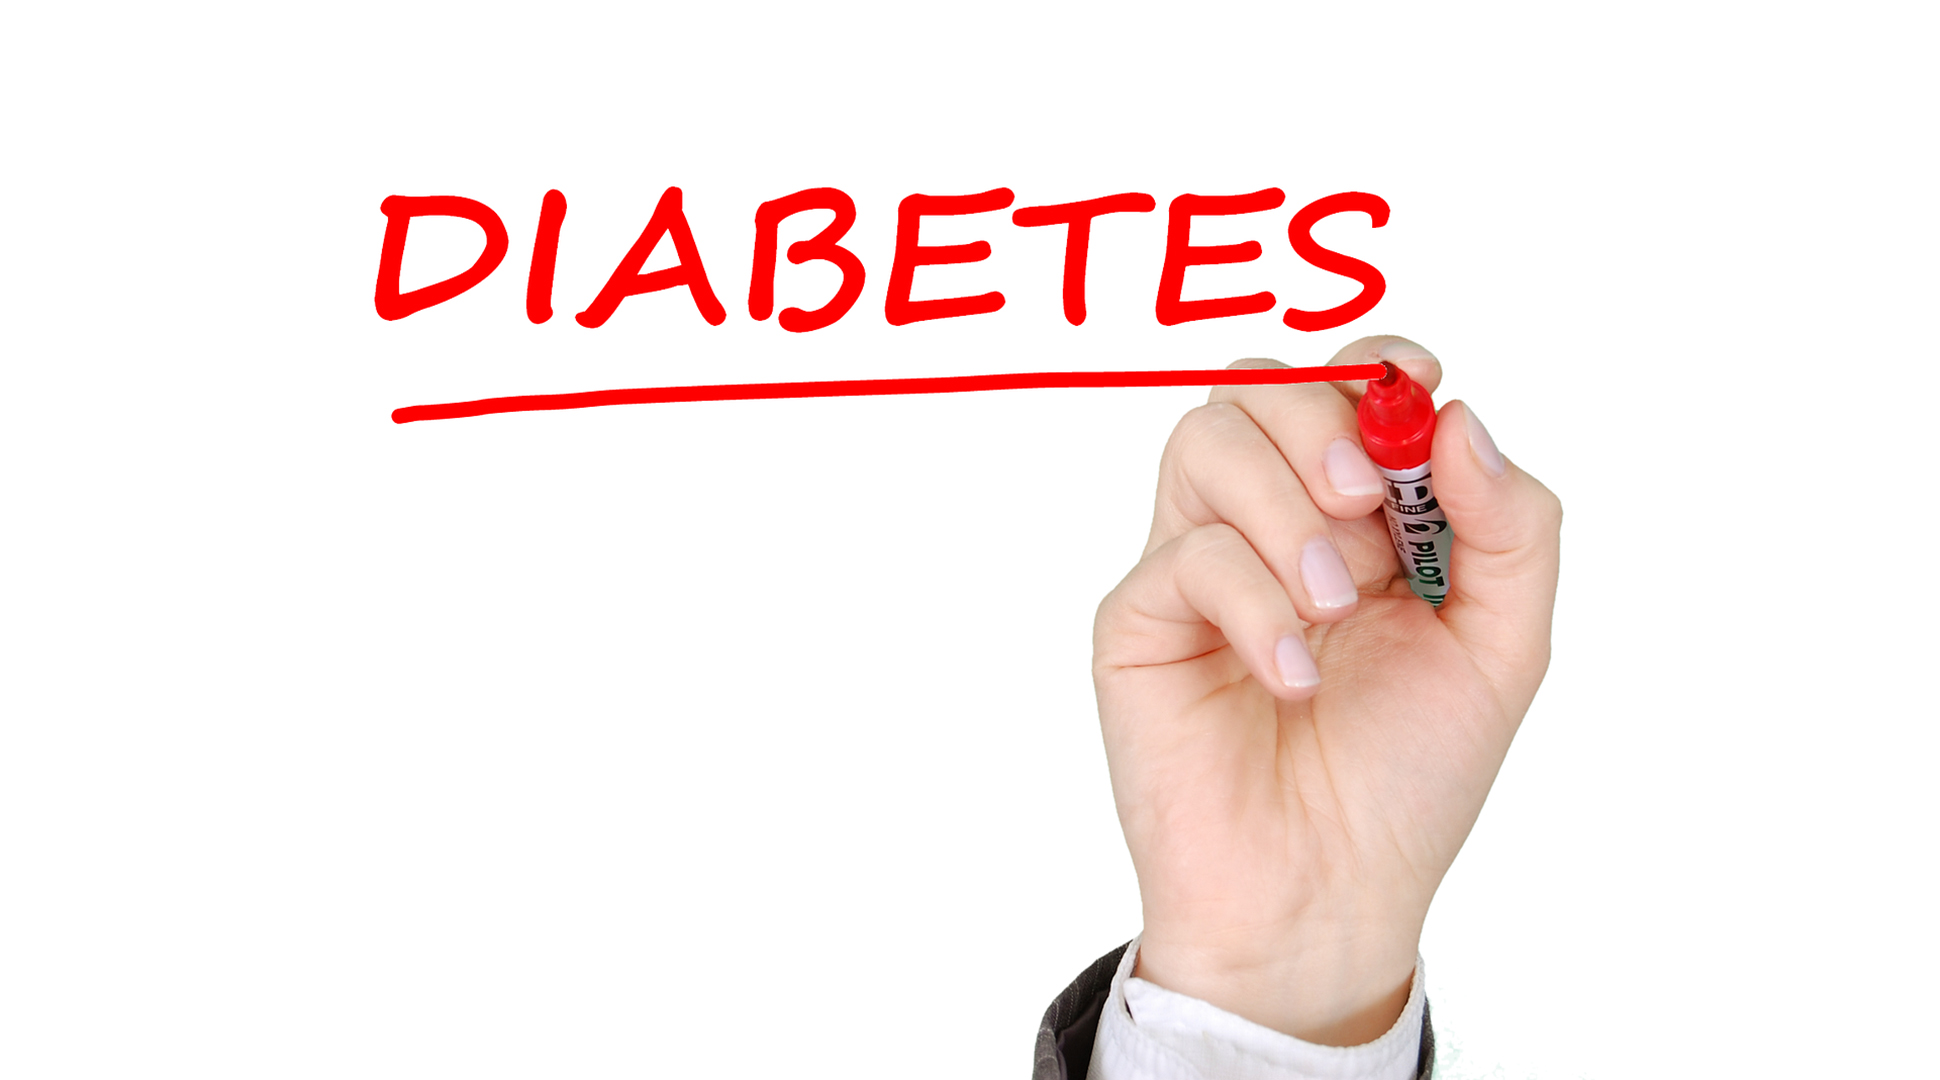 Elizabeth shares her Type 1 diabetes story